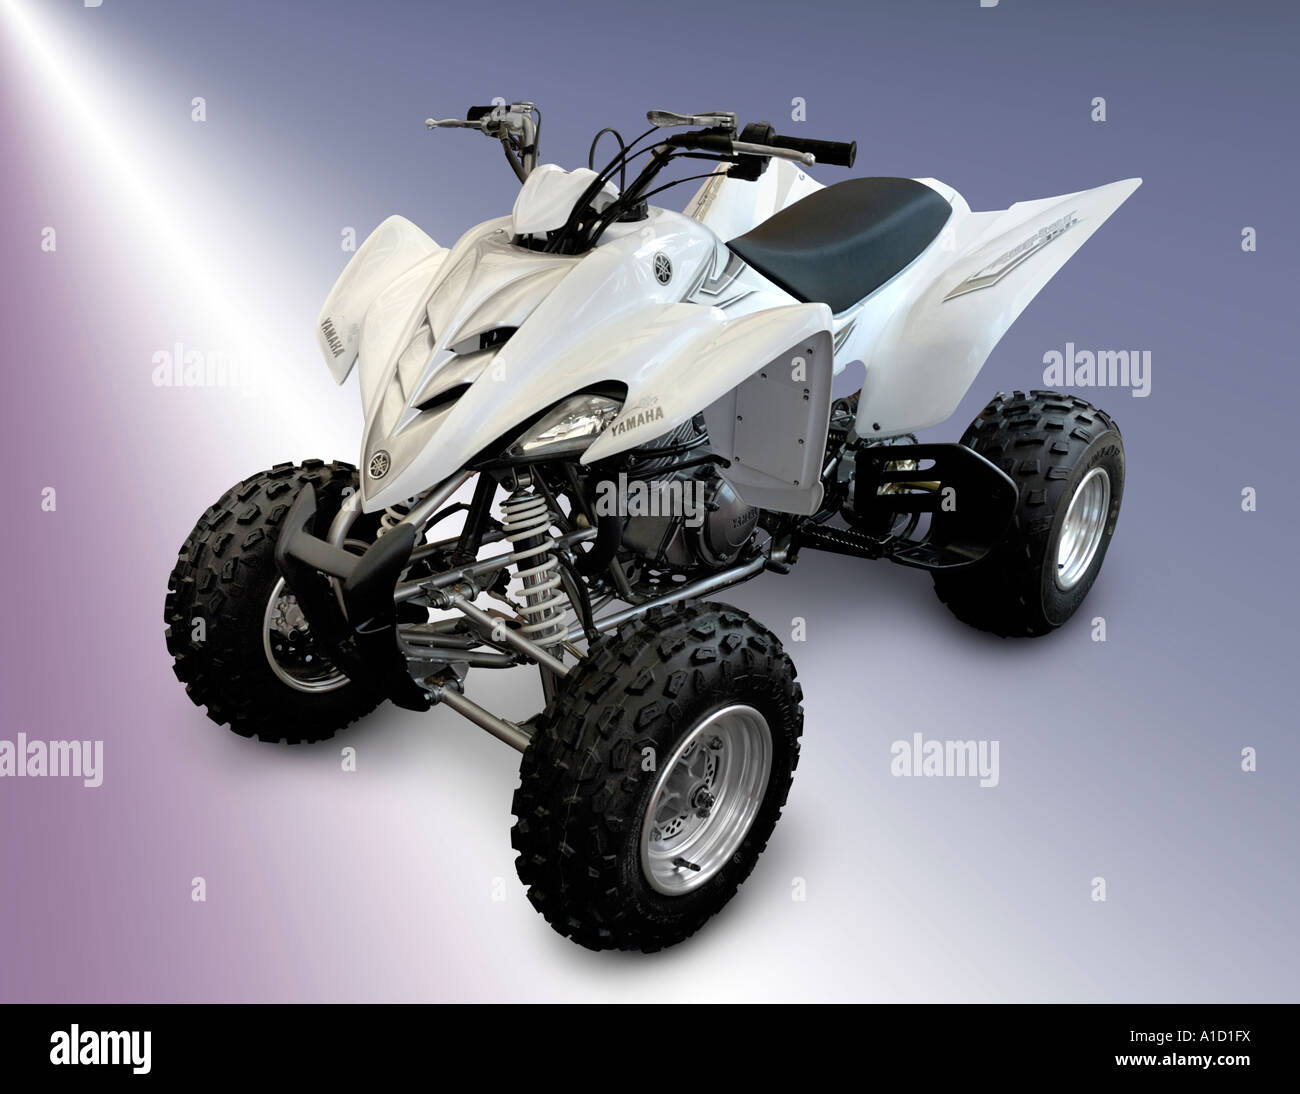 Yamaha raptor hi-res stock photography and images - Alamy